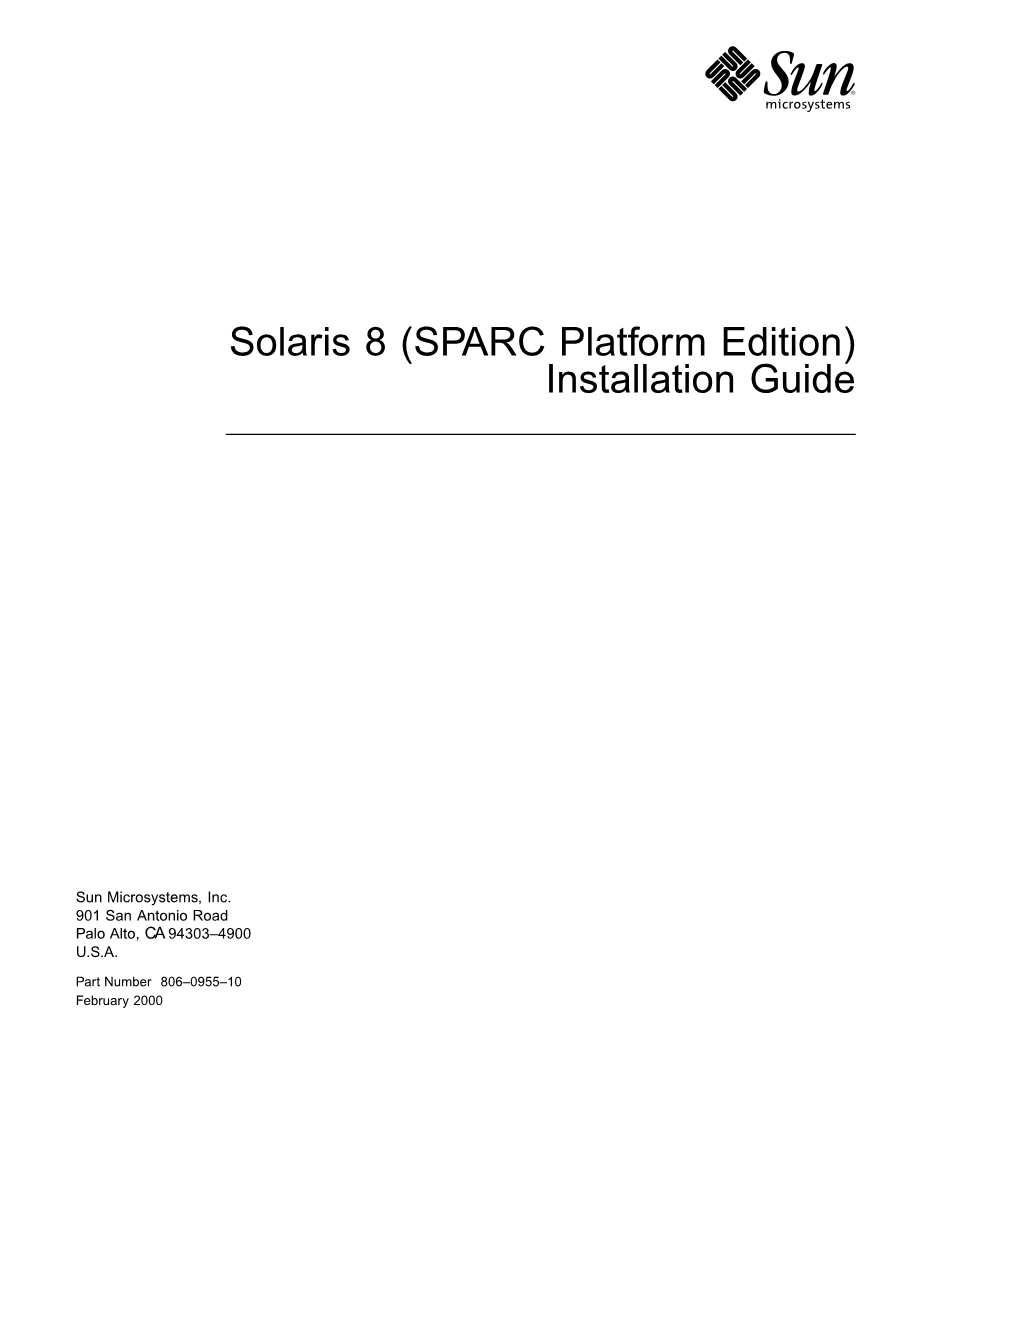 Solaris 8 (SPARC Platform Edition) Installation Guide